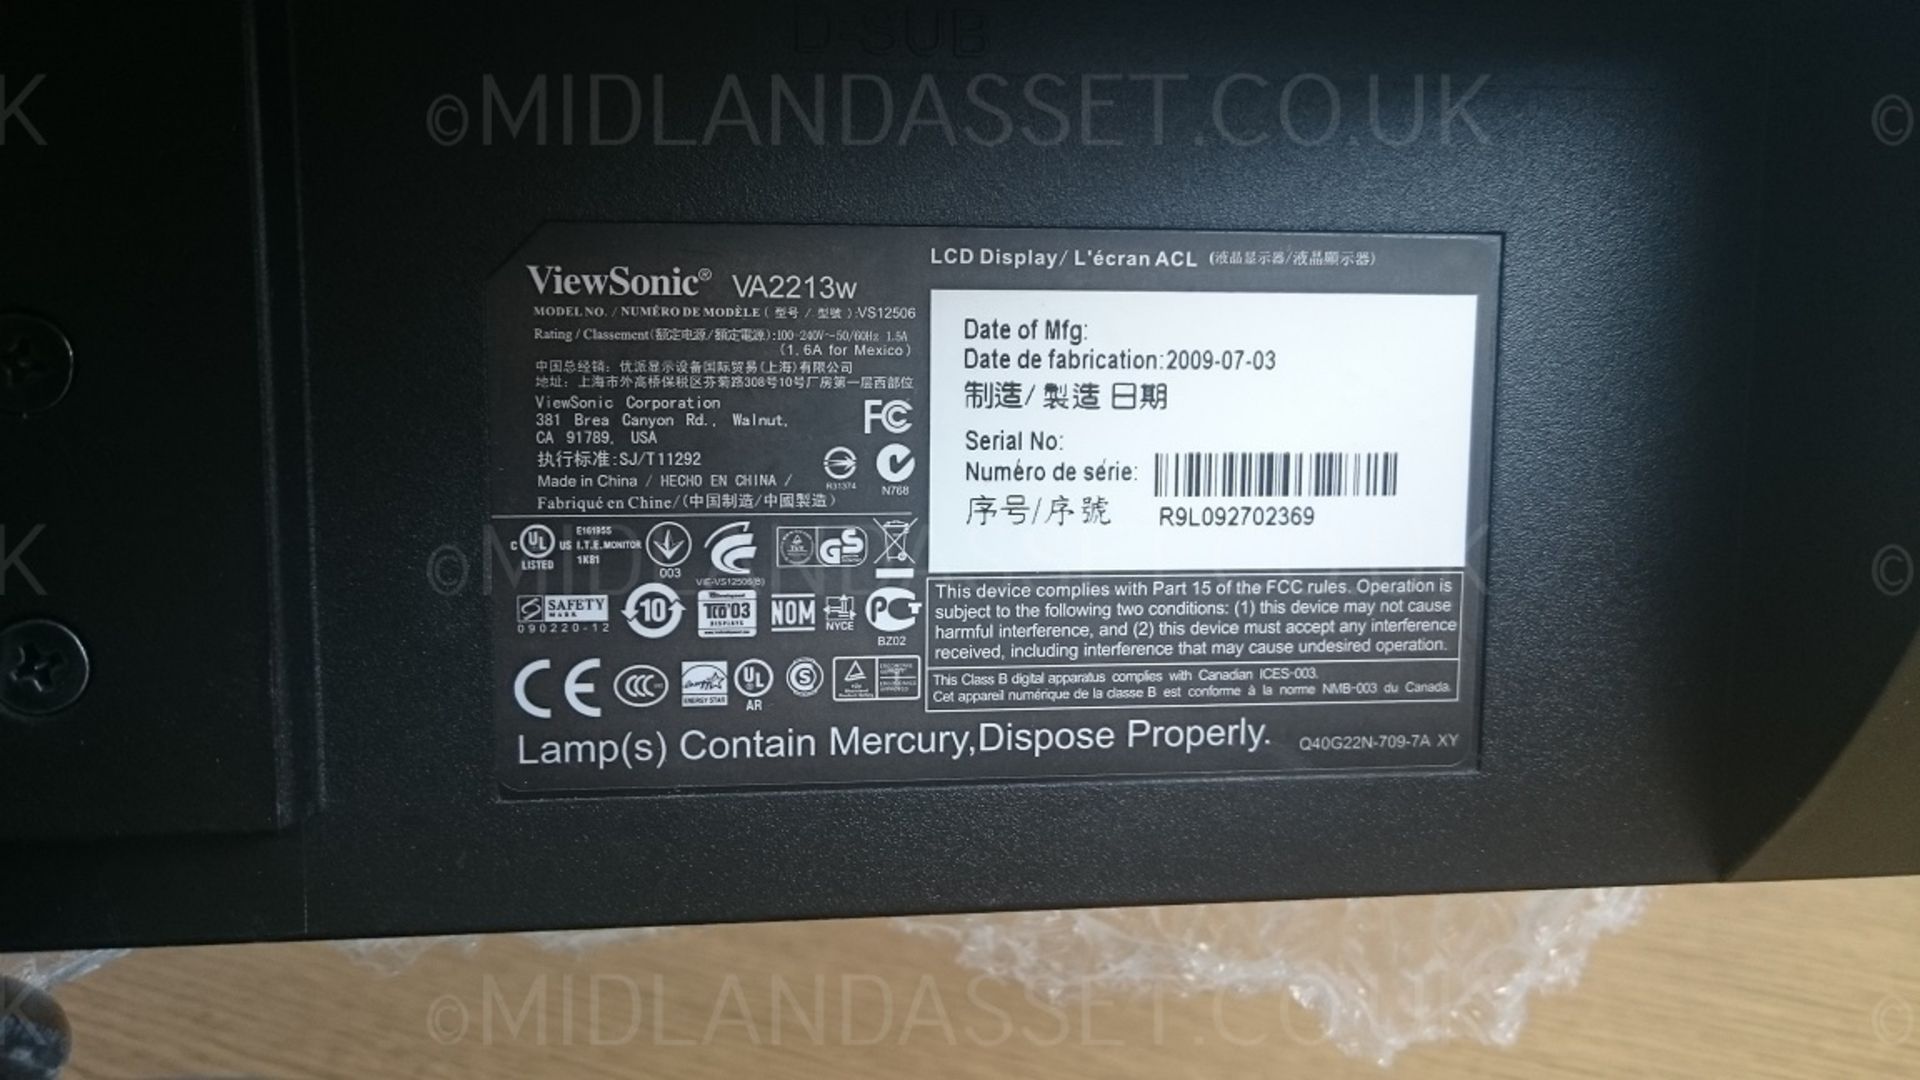 VIEWSONIC 21.5" WIDESCREEN LCD MONITOR VA2213W - Image 3 of 4